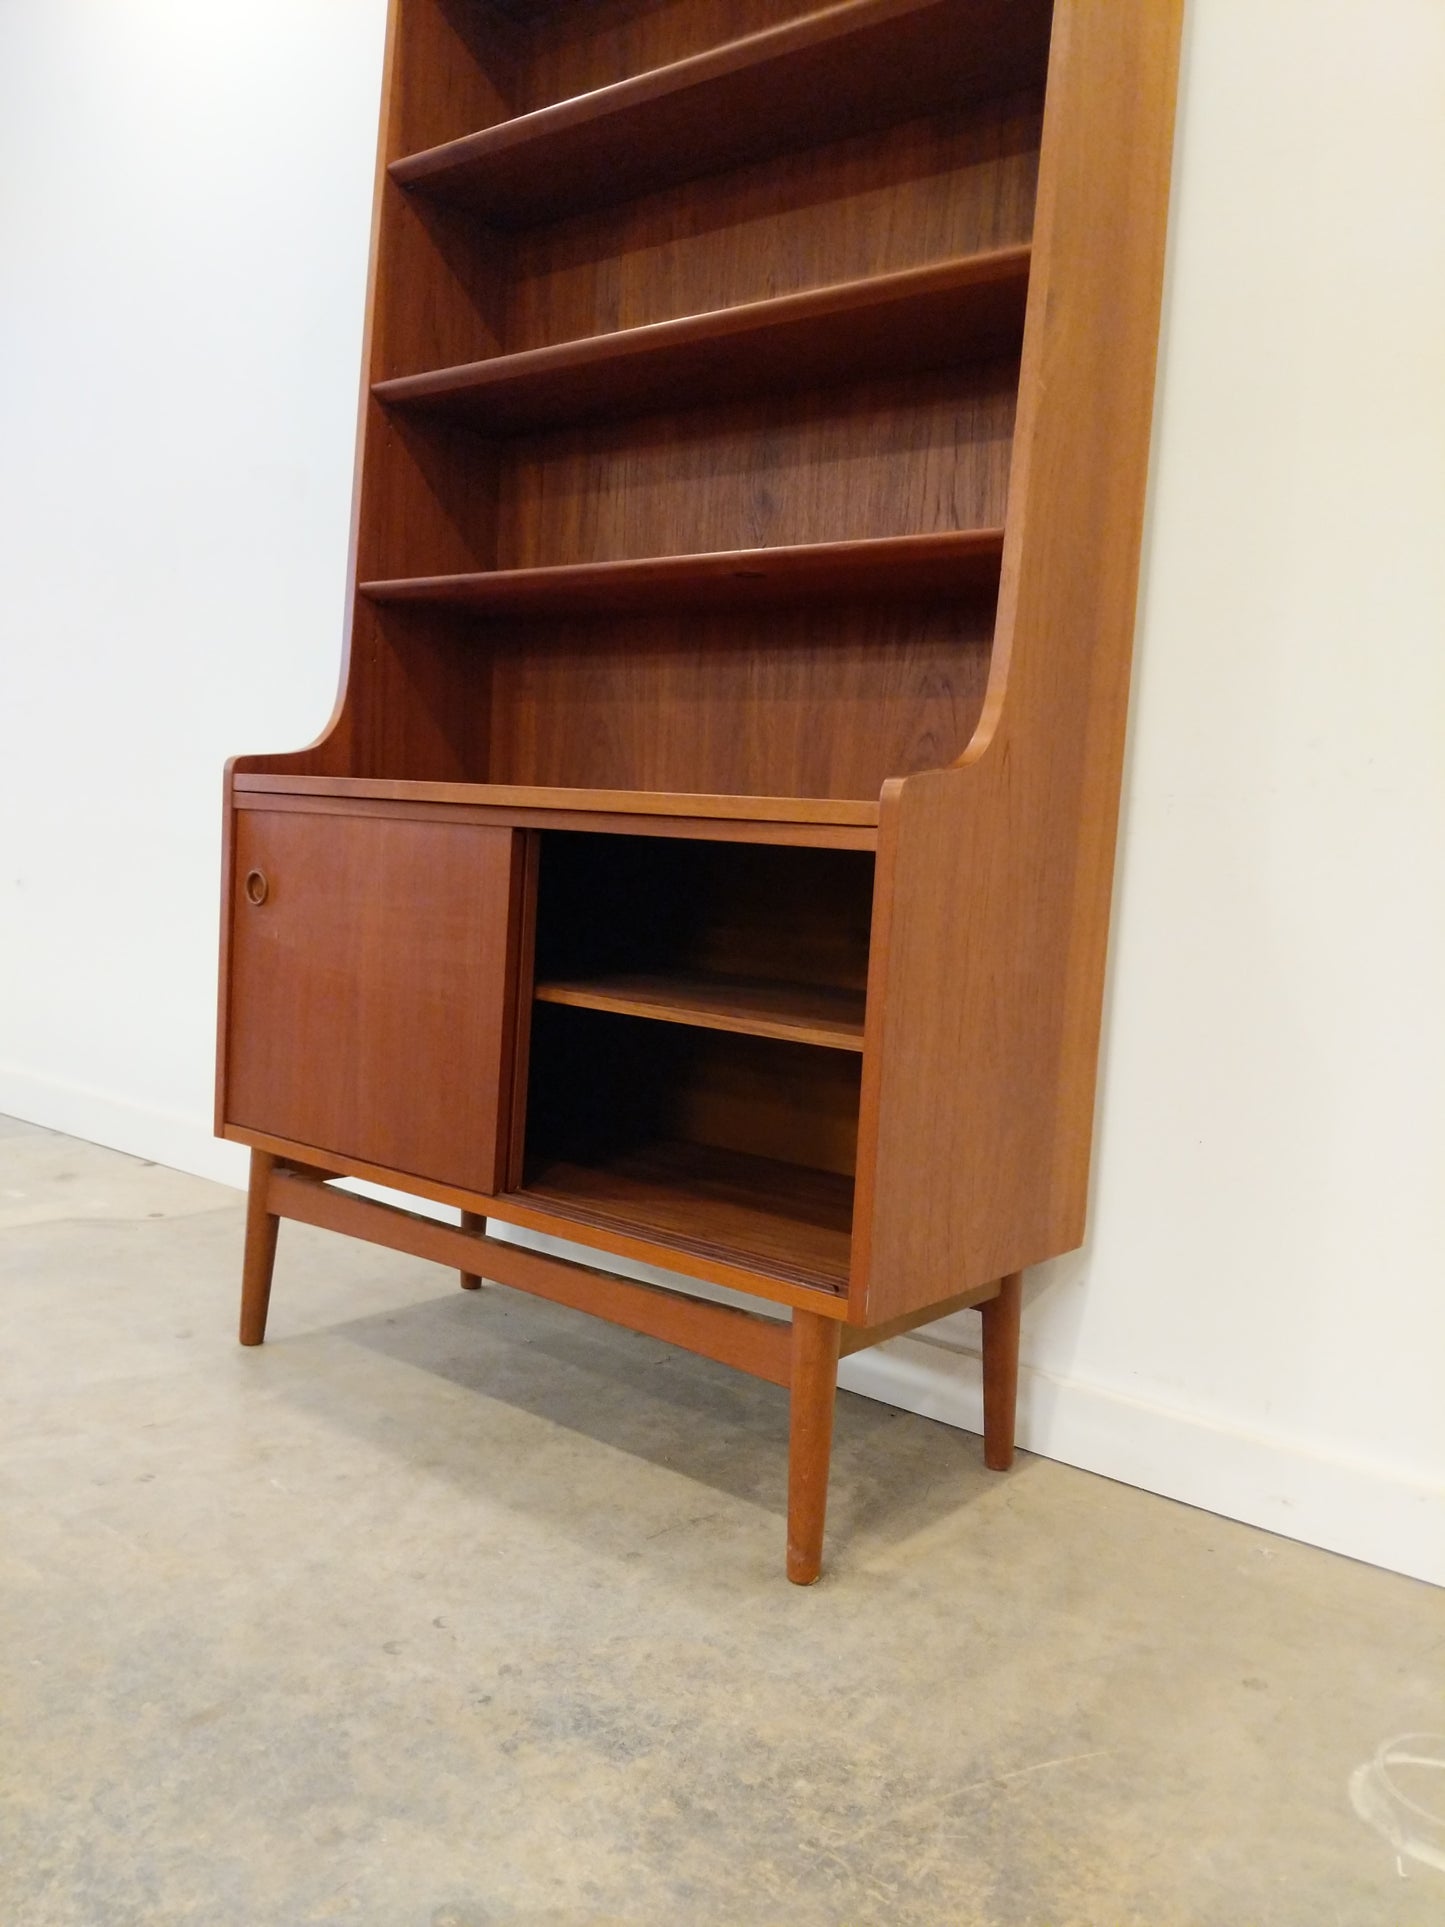 RESERVED - Vintage Danish Modern Teak Bookshelf / Cabinet